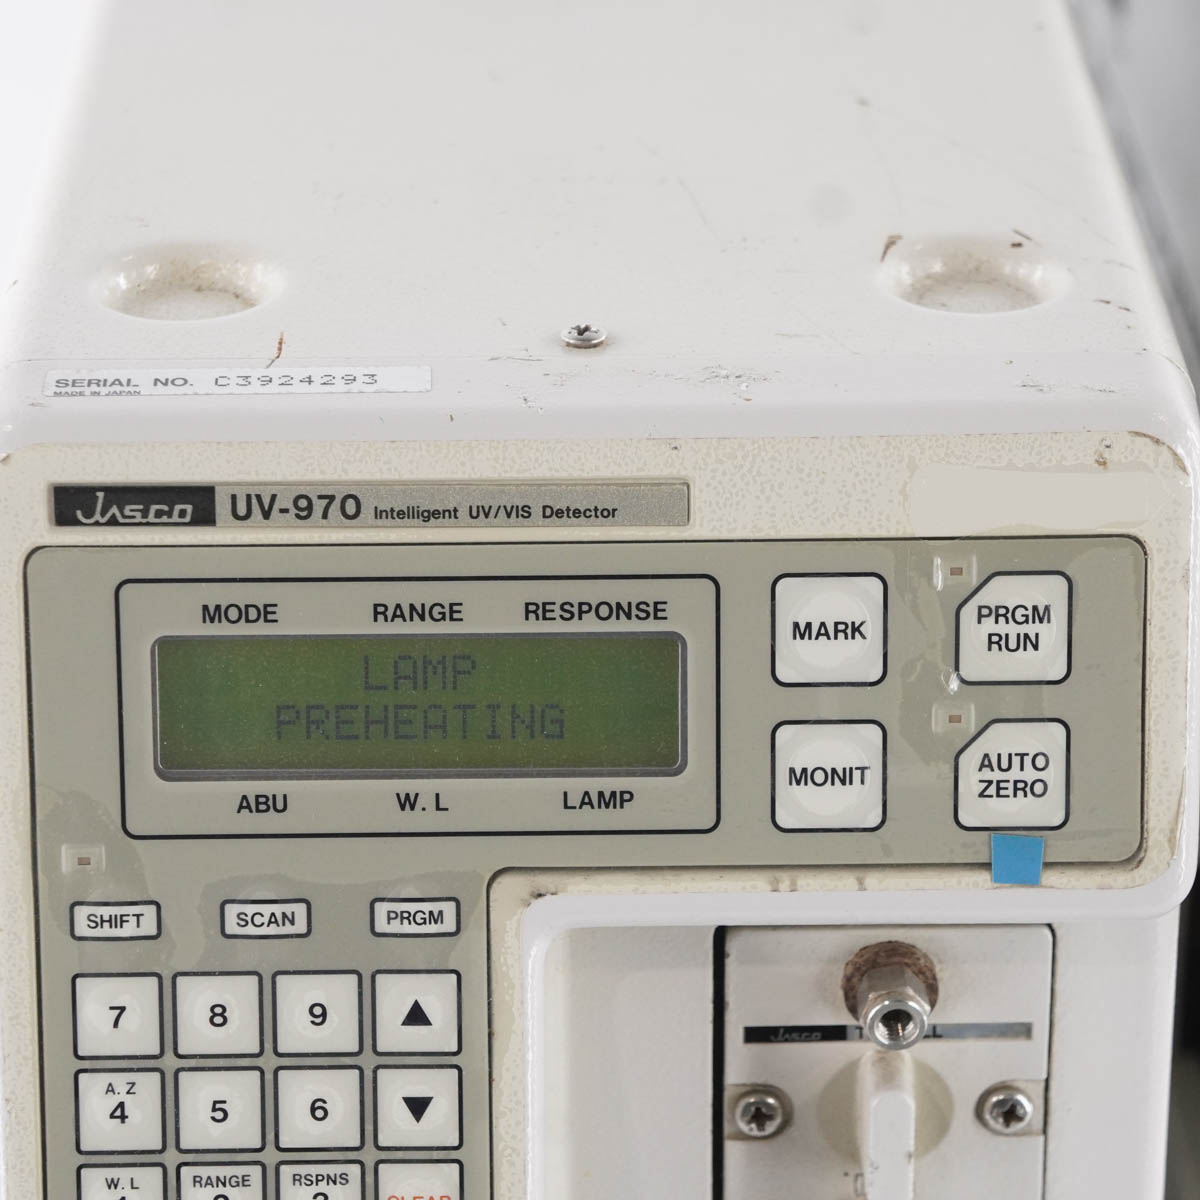 [DW]USED 8日保証 セット JASCO AS-950 UV-970 PU-1580 HPLC Intelligent UV VIS Detector Sampler [04631-0001] - 19